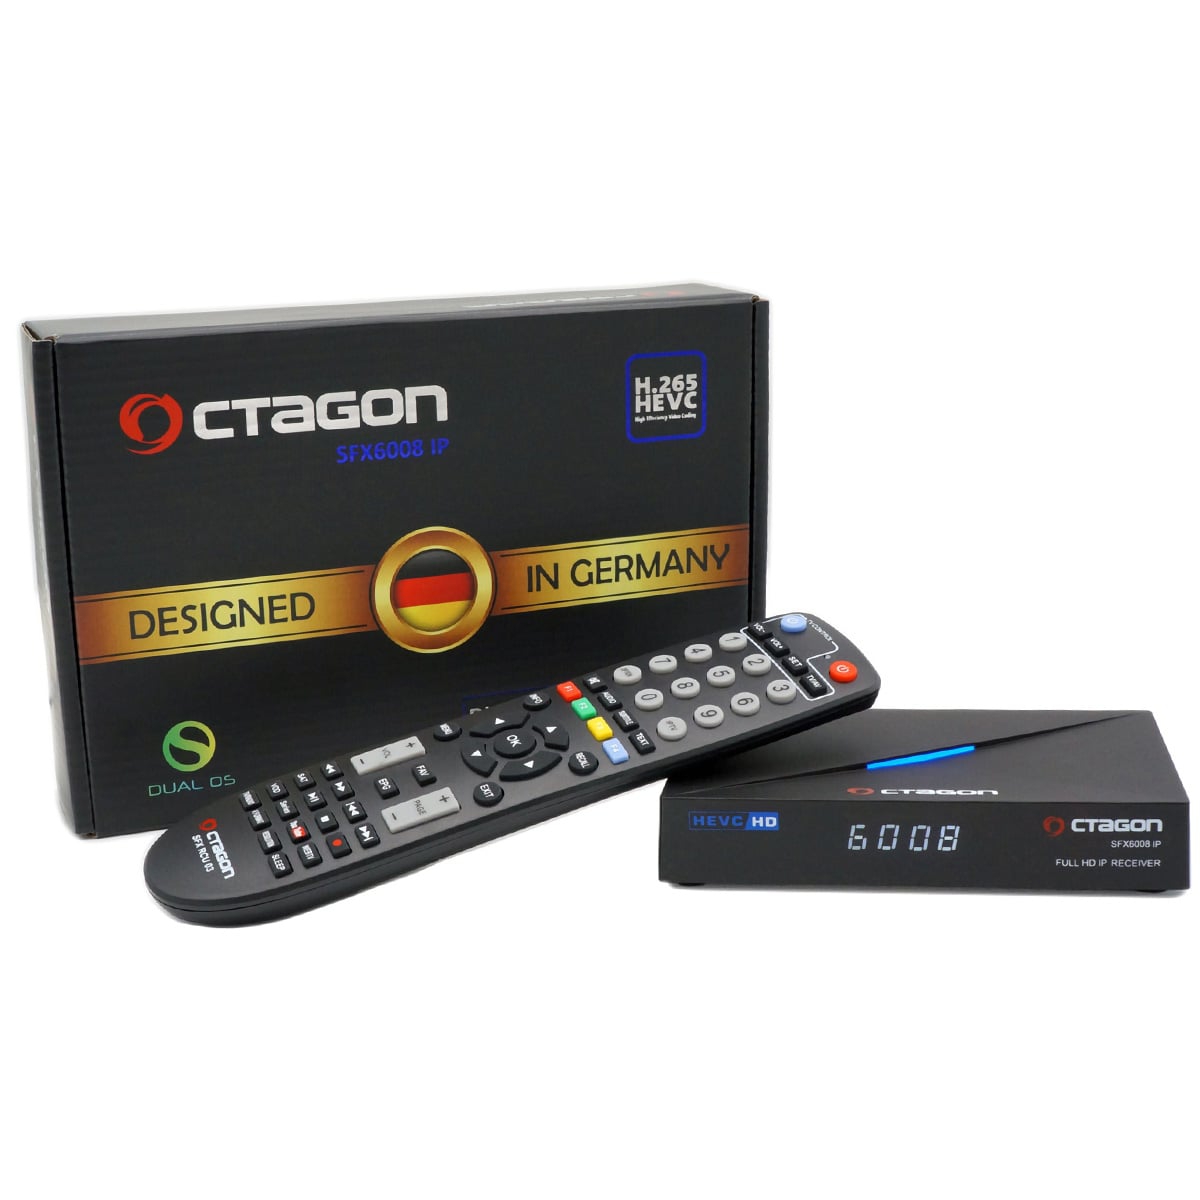 Octagon SFX6008 IP Full HD IP-Receiver (Linux E2 & Define OS, 1080p, HDMI, USB, LAN, Schwarz)